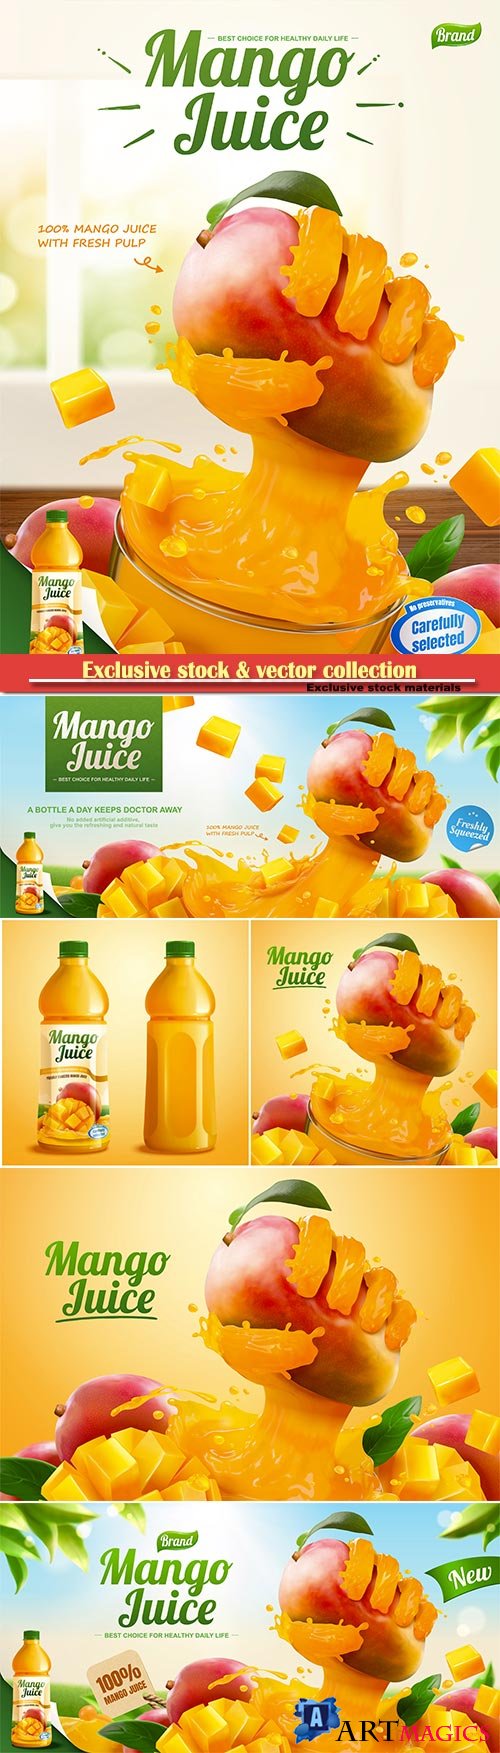 Mango juice banner ads with liquid hand grabbing fruit effect in 3d vector illustration